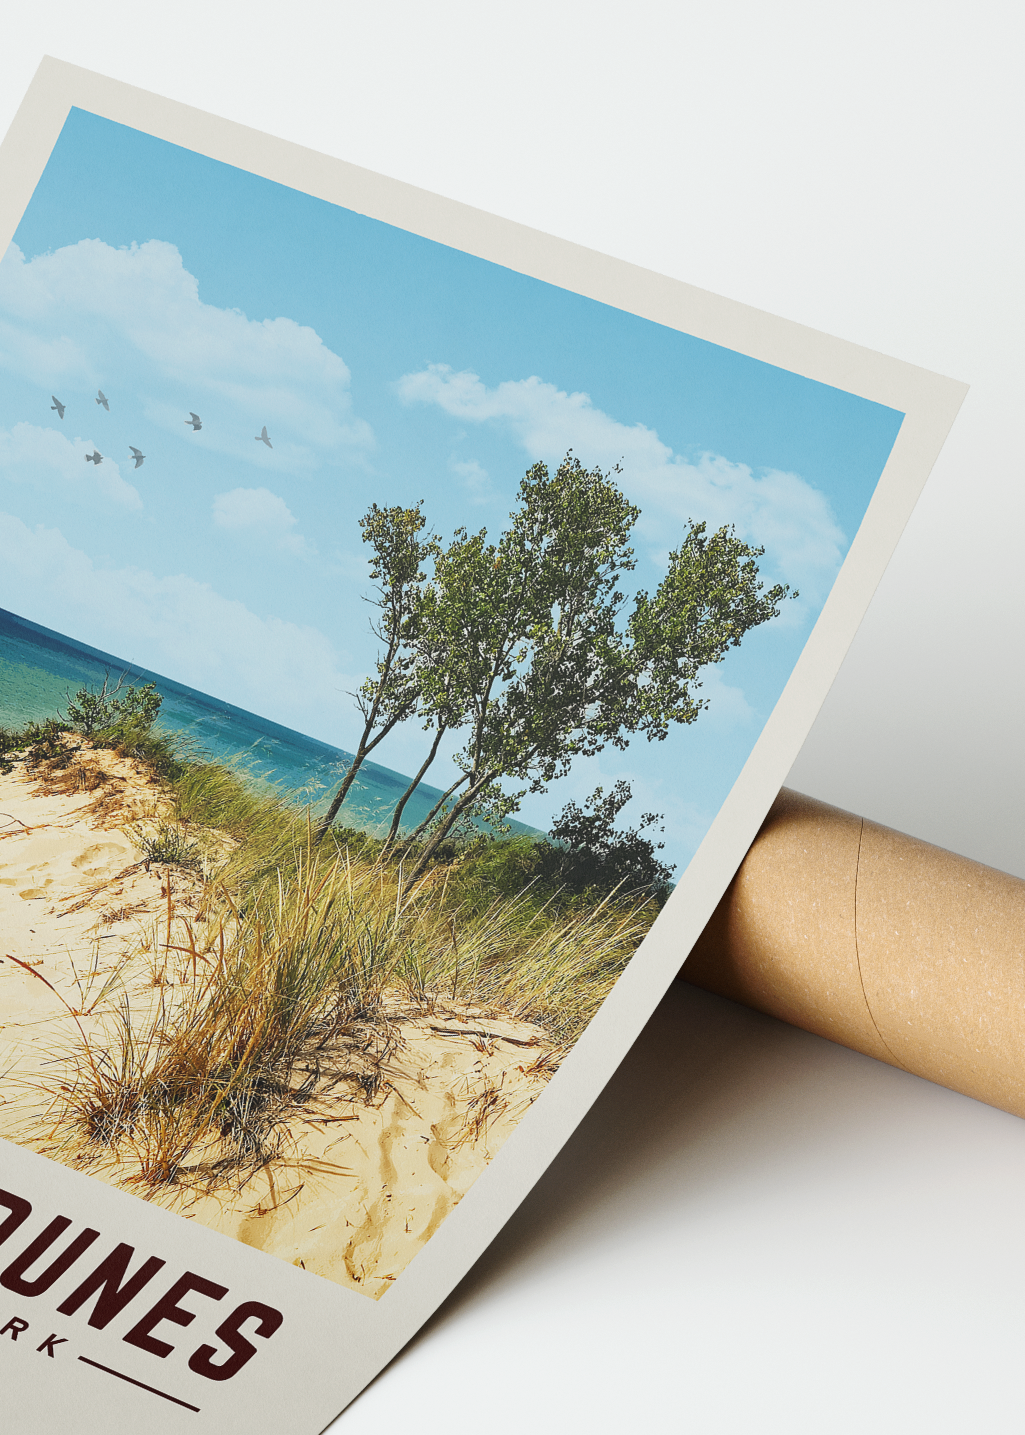 Indiana Dunes Minimalist National Park Poster